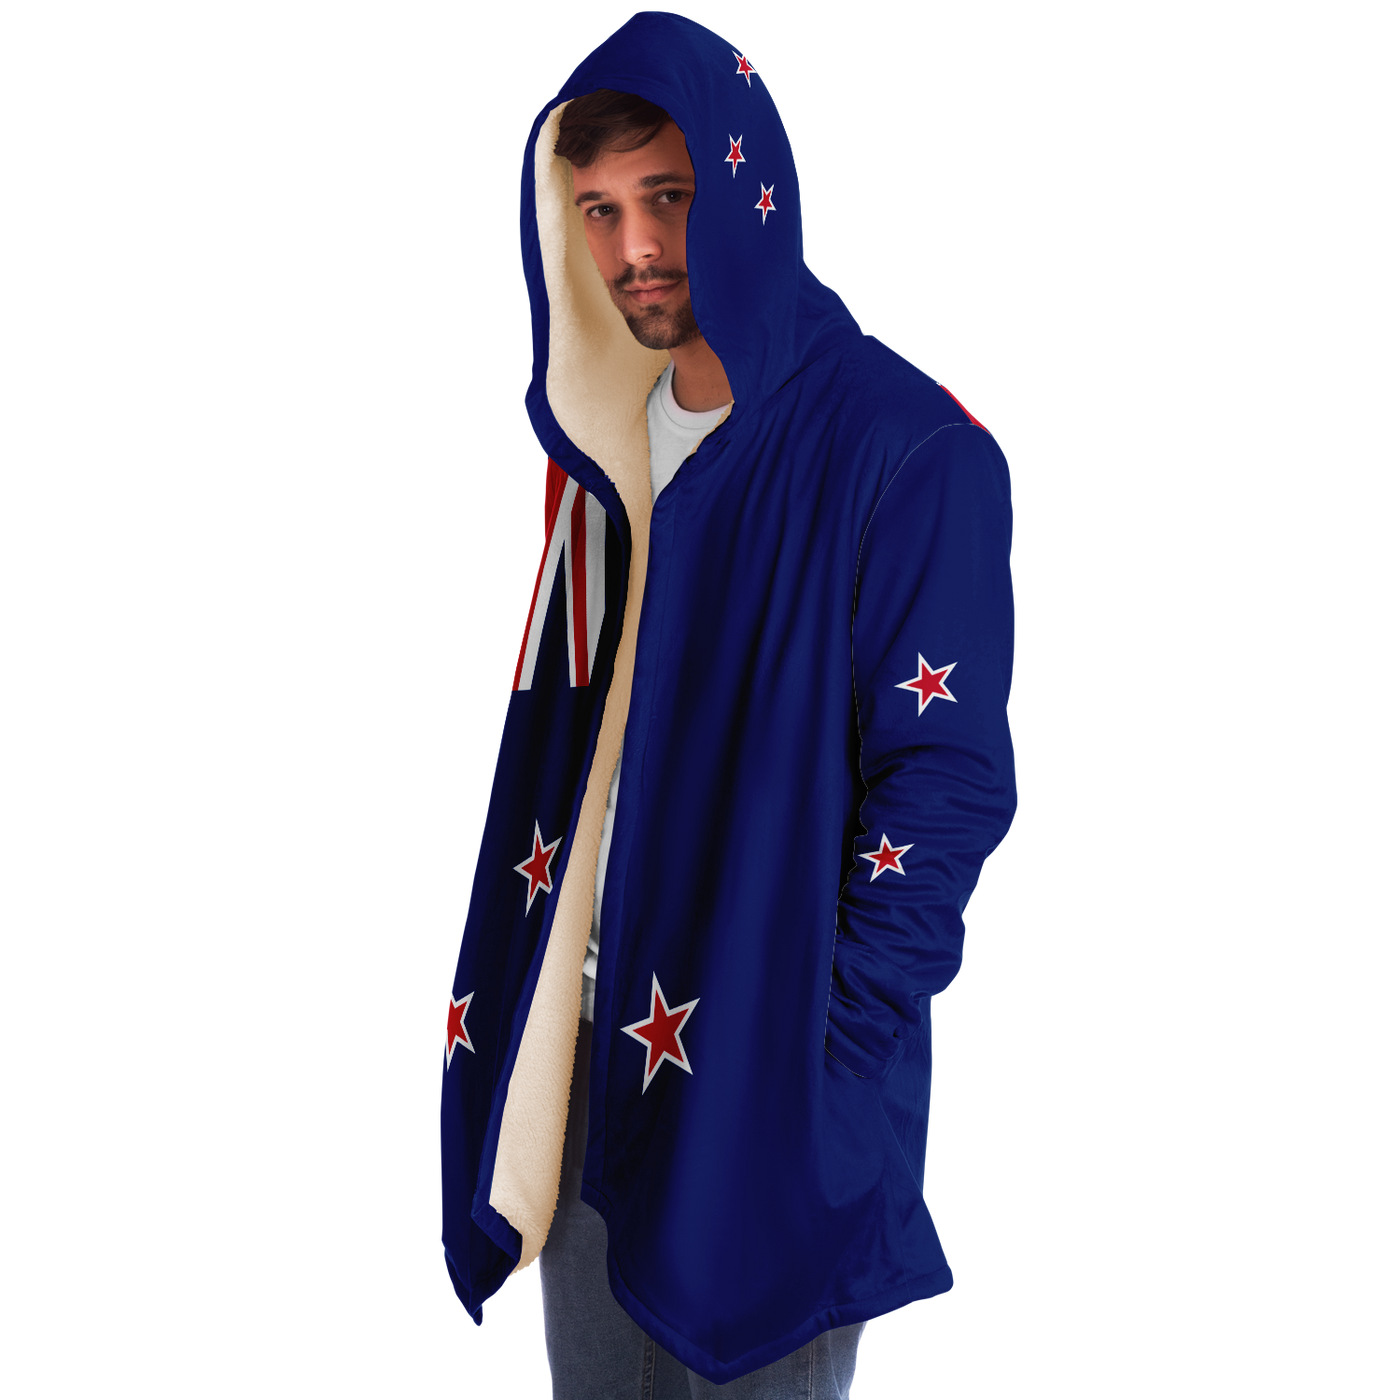 Capa de Microfibra Polar com a Bandeira da Nova Zelândia